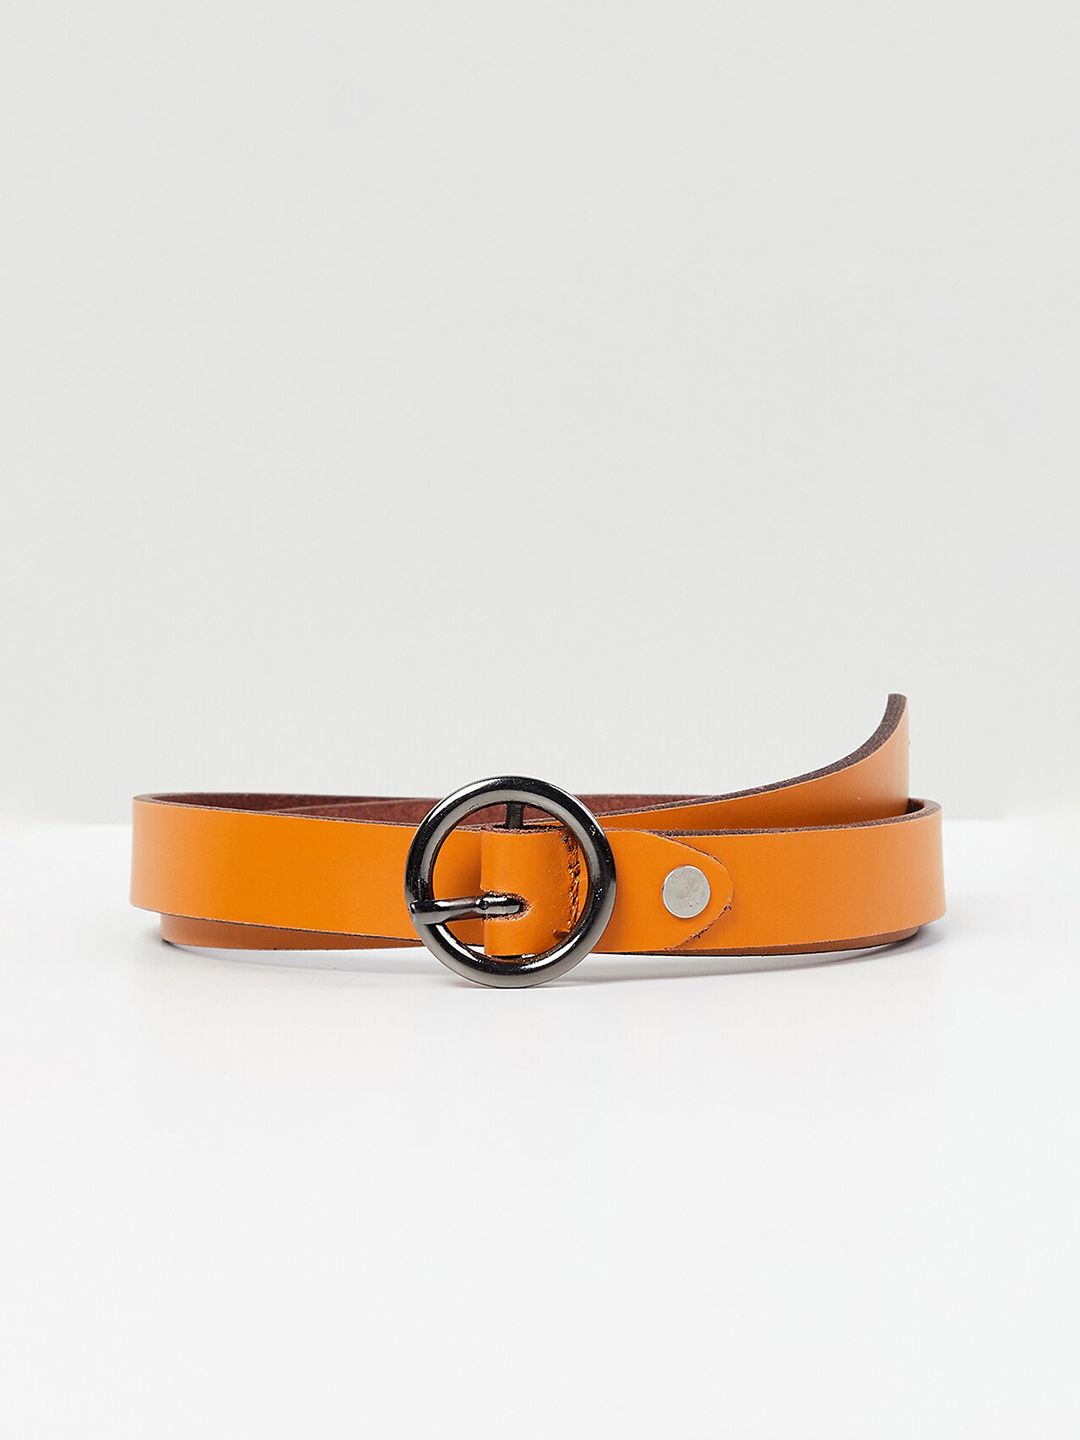 max Women Orange Leather Belt Price in India